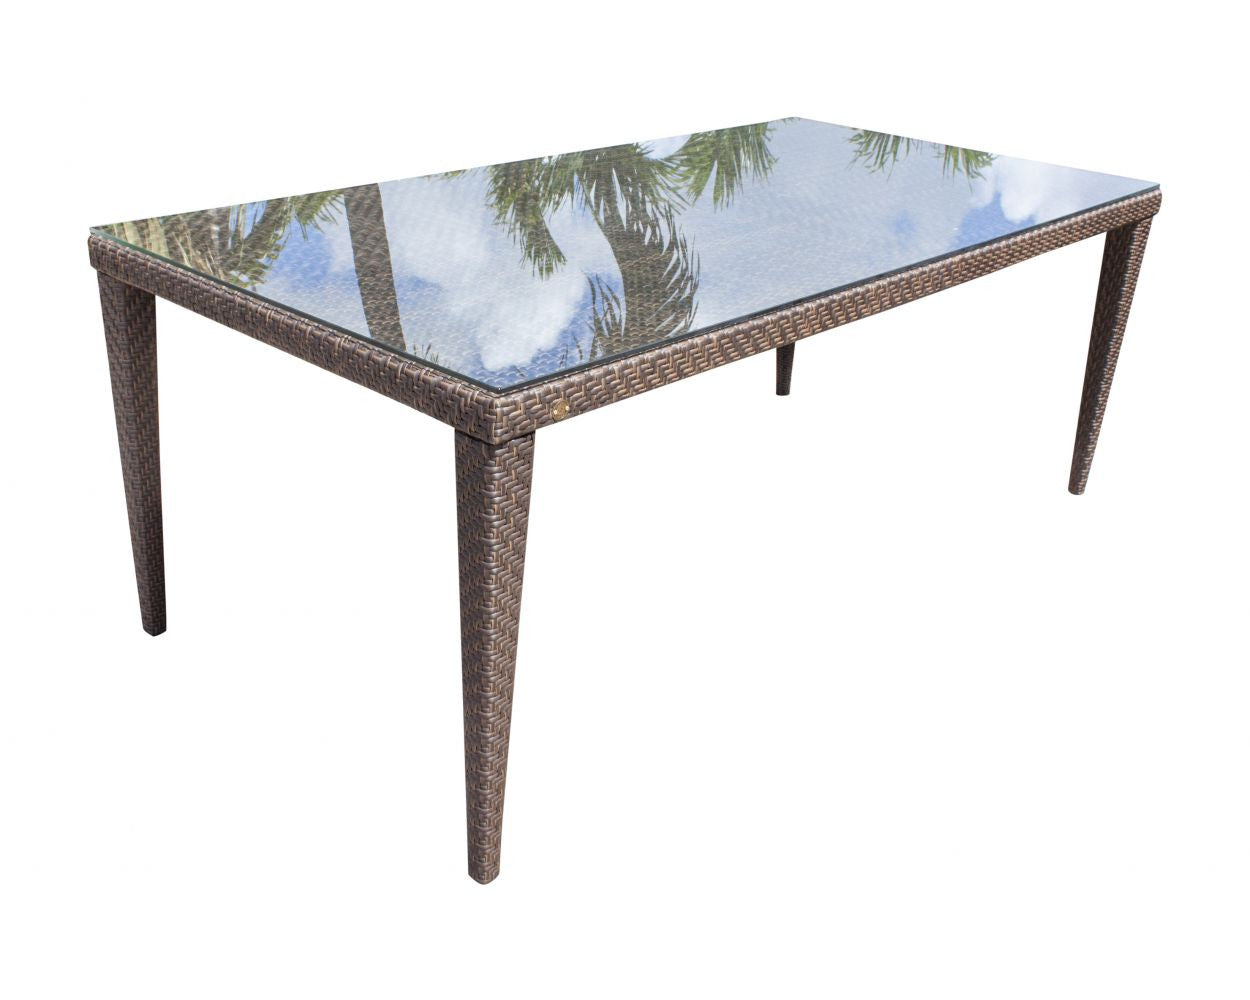 Hospitality Rattan Soho Large Rectangular Dining Table with Glass